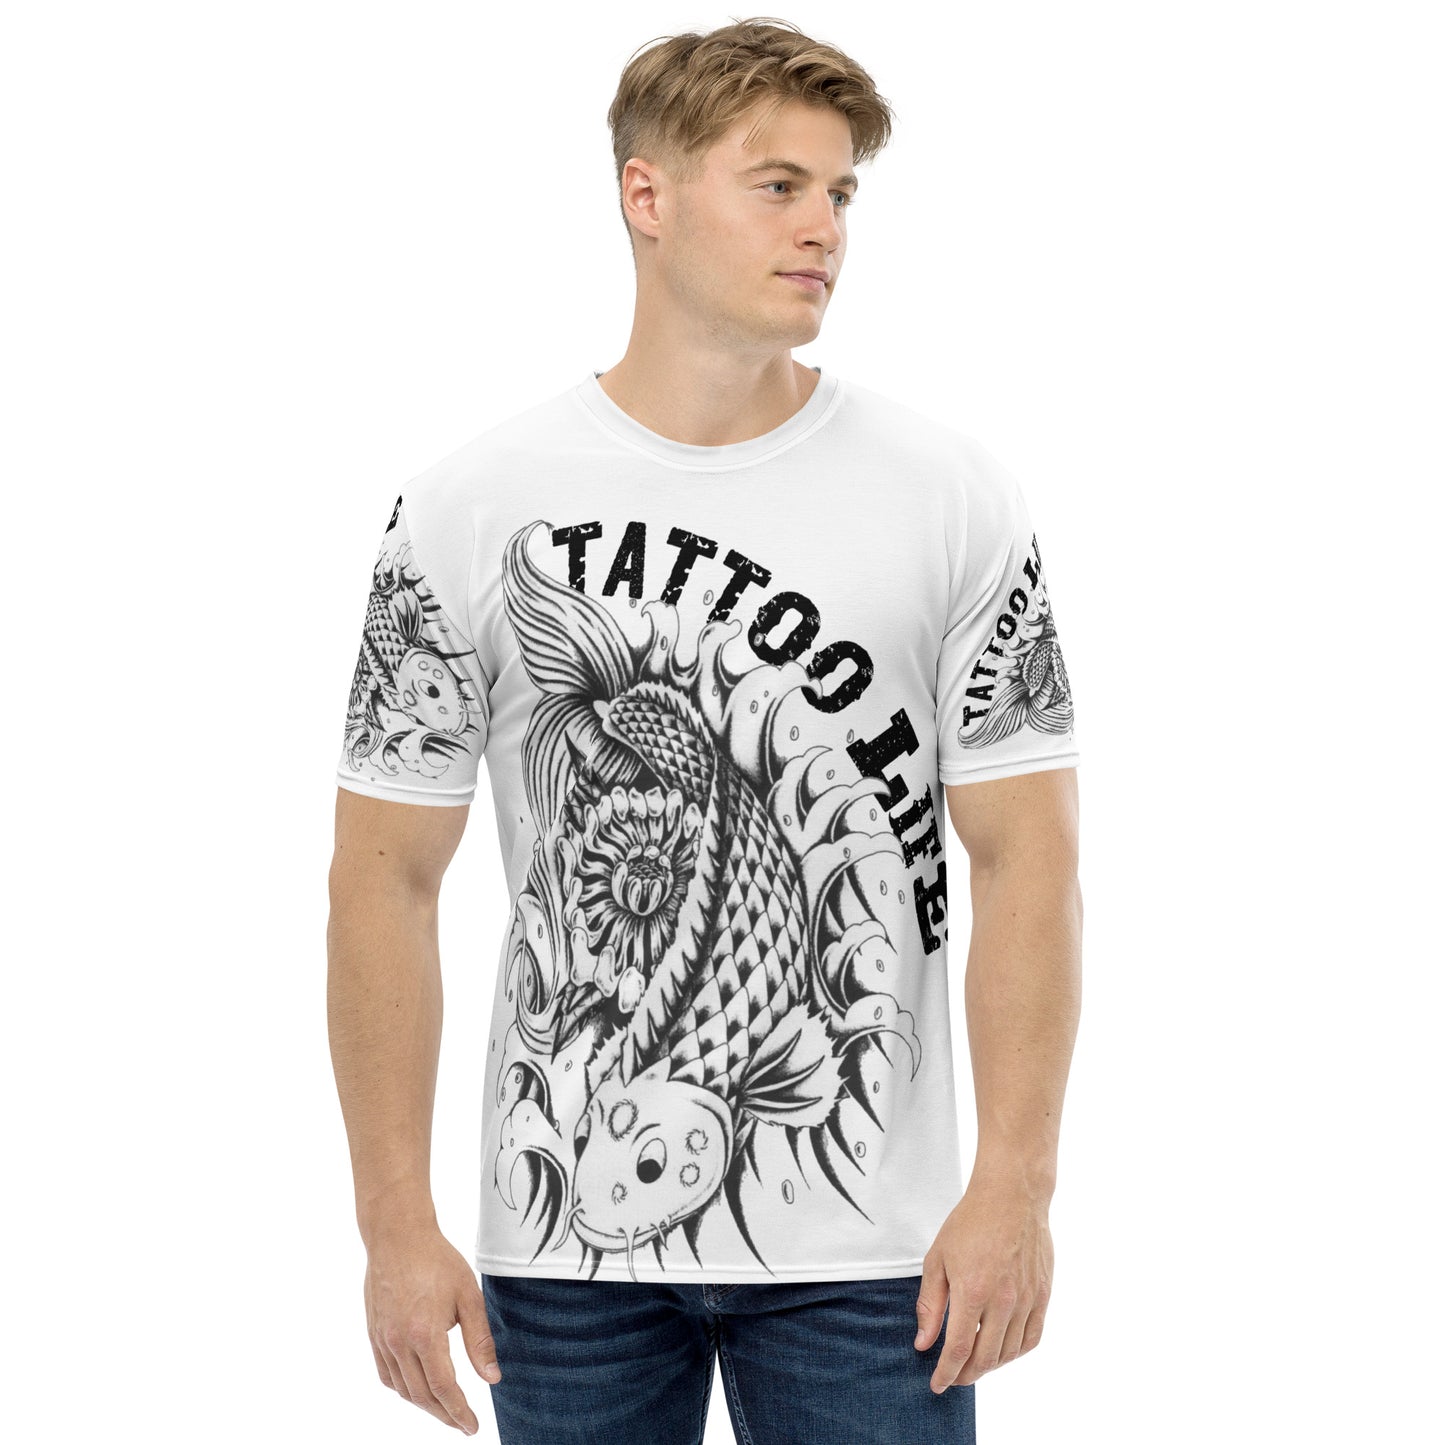 TATTOO LIFE - Koi Fish (All Over Printed Shirt)